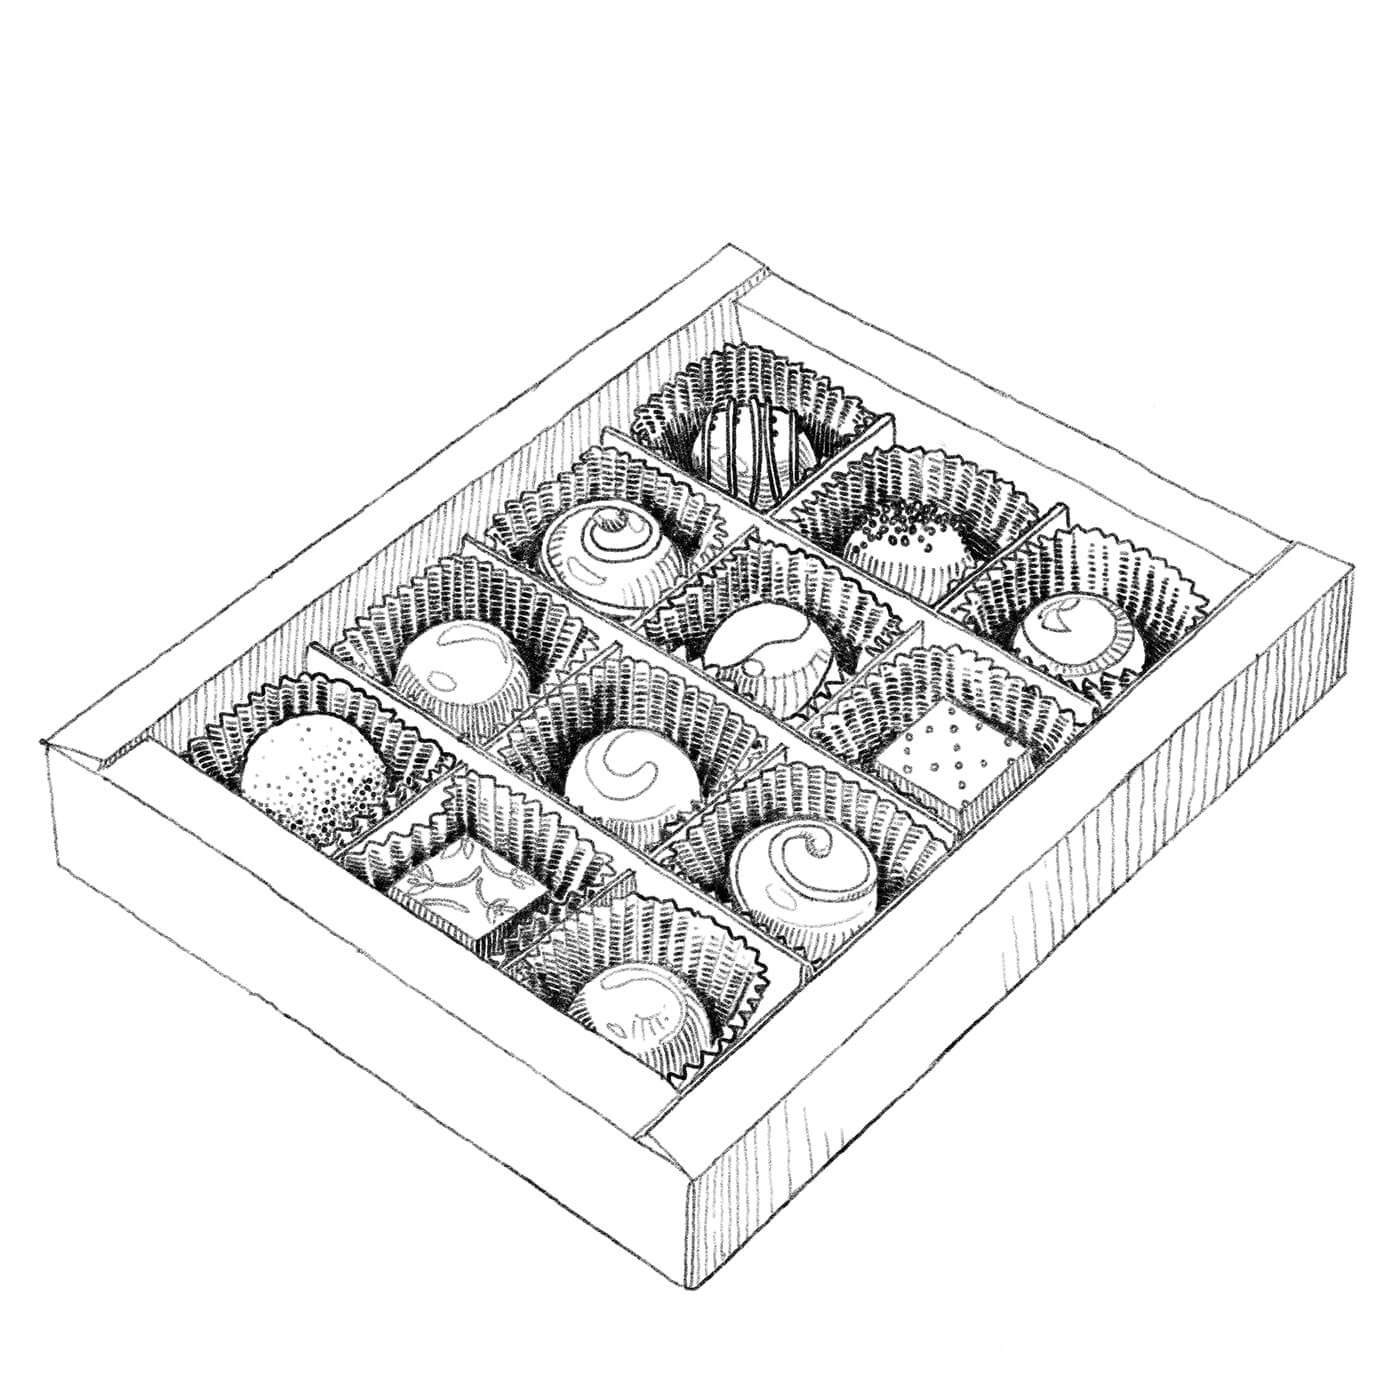 Illustrated box of chocolates